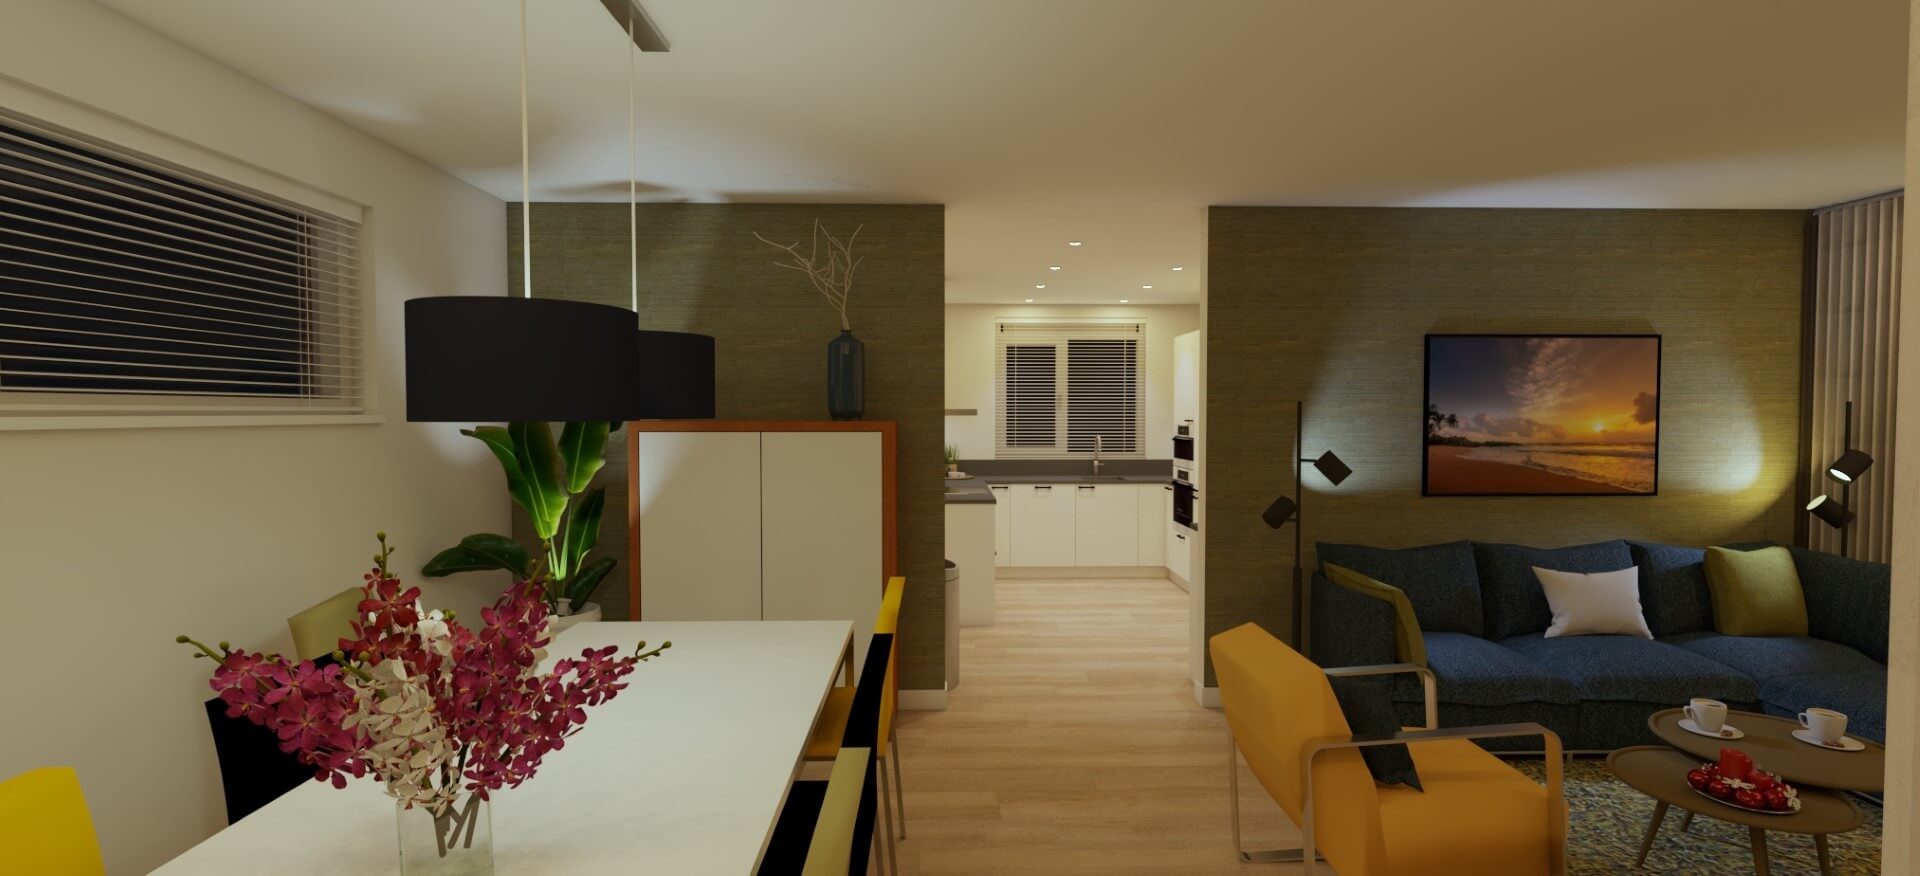 3D interieurontwerp woonkamer Goeree-Overflakkee - Huis & Interieur